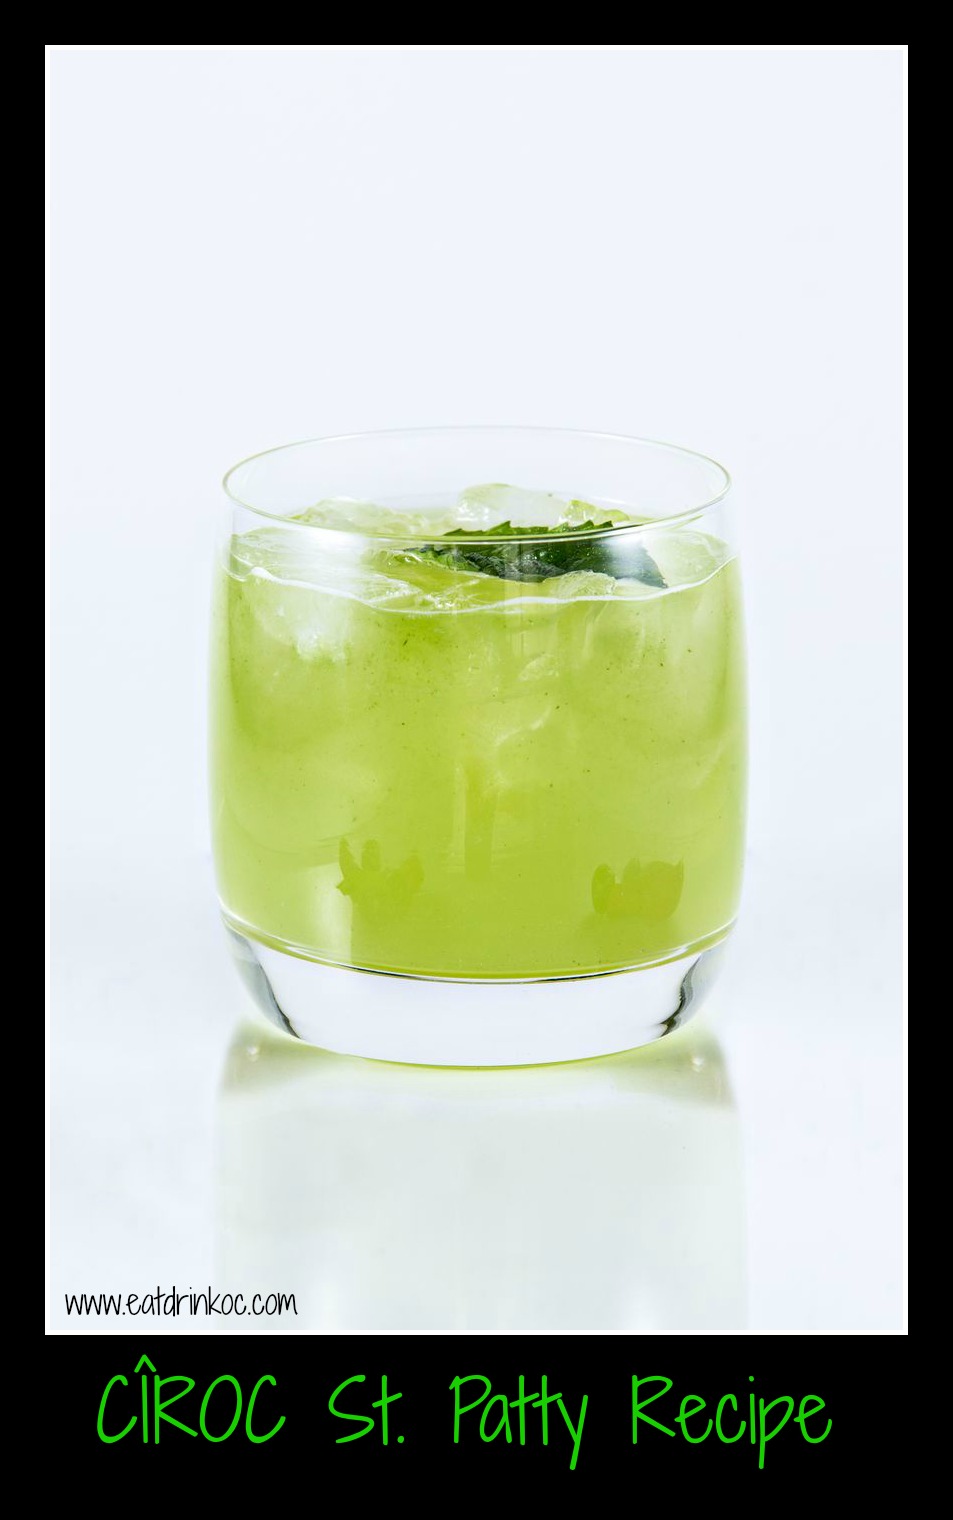 patty cocktail